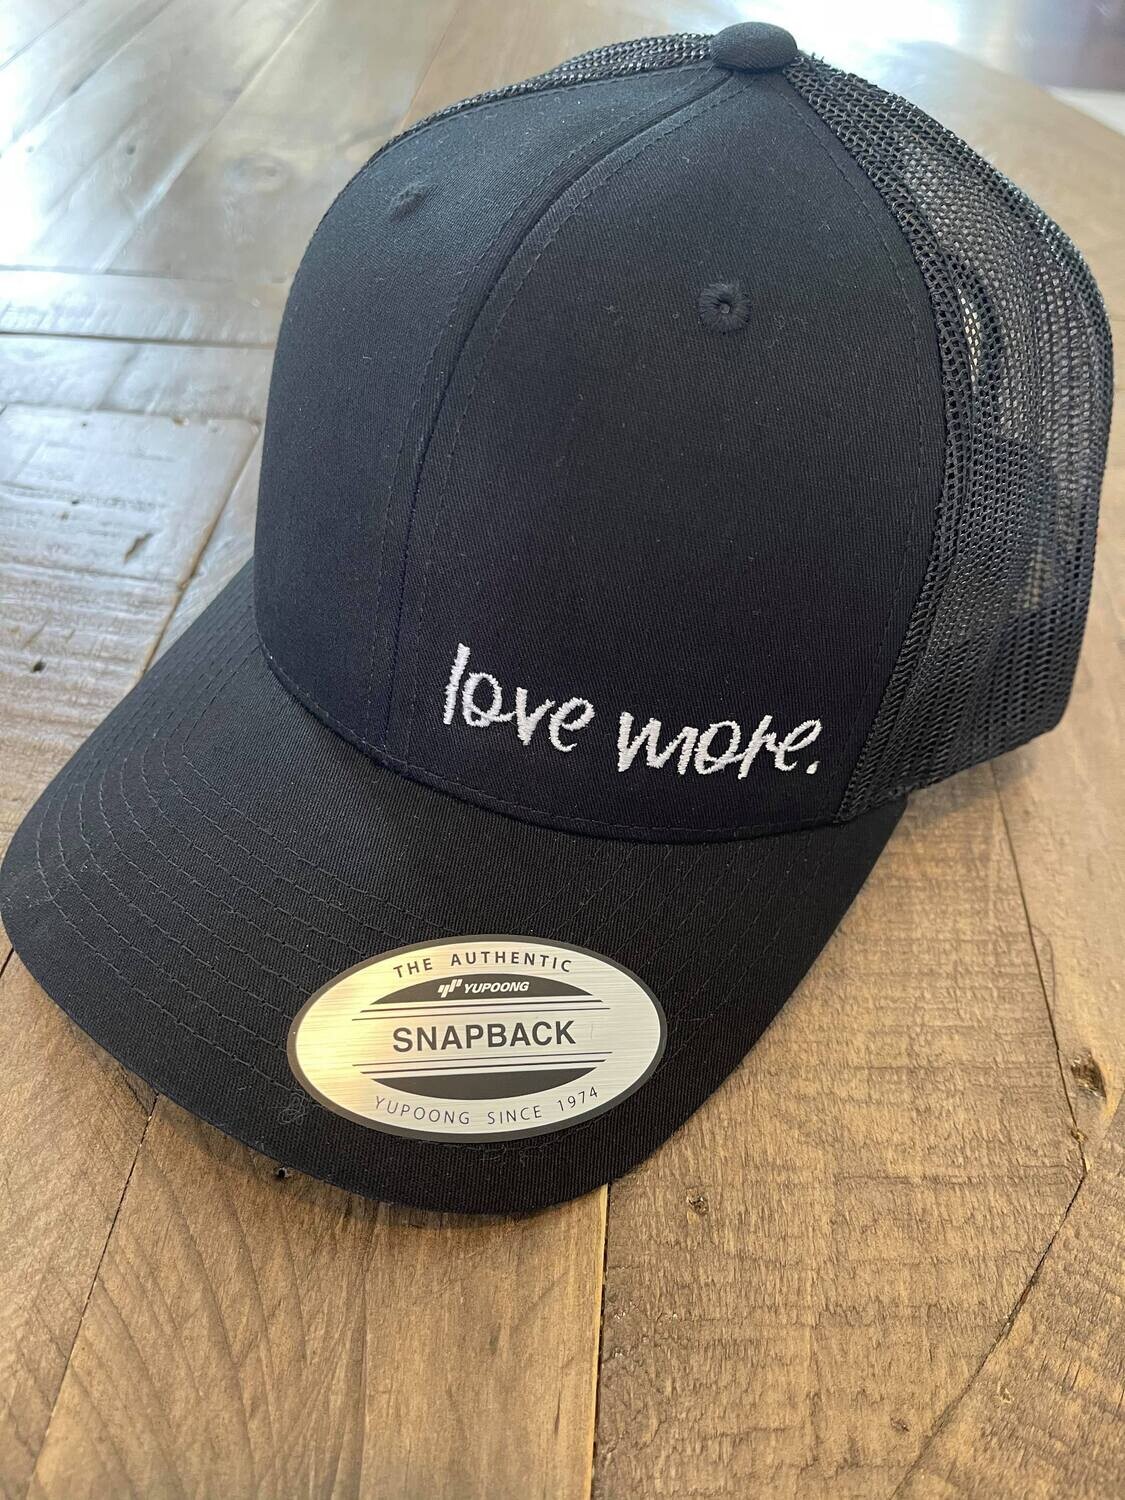 love more. black ball cap